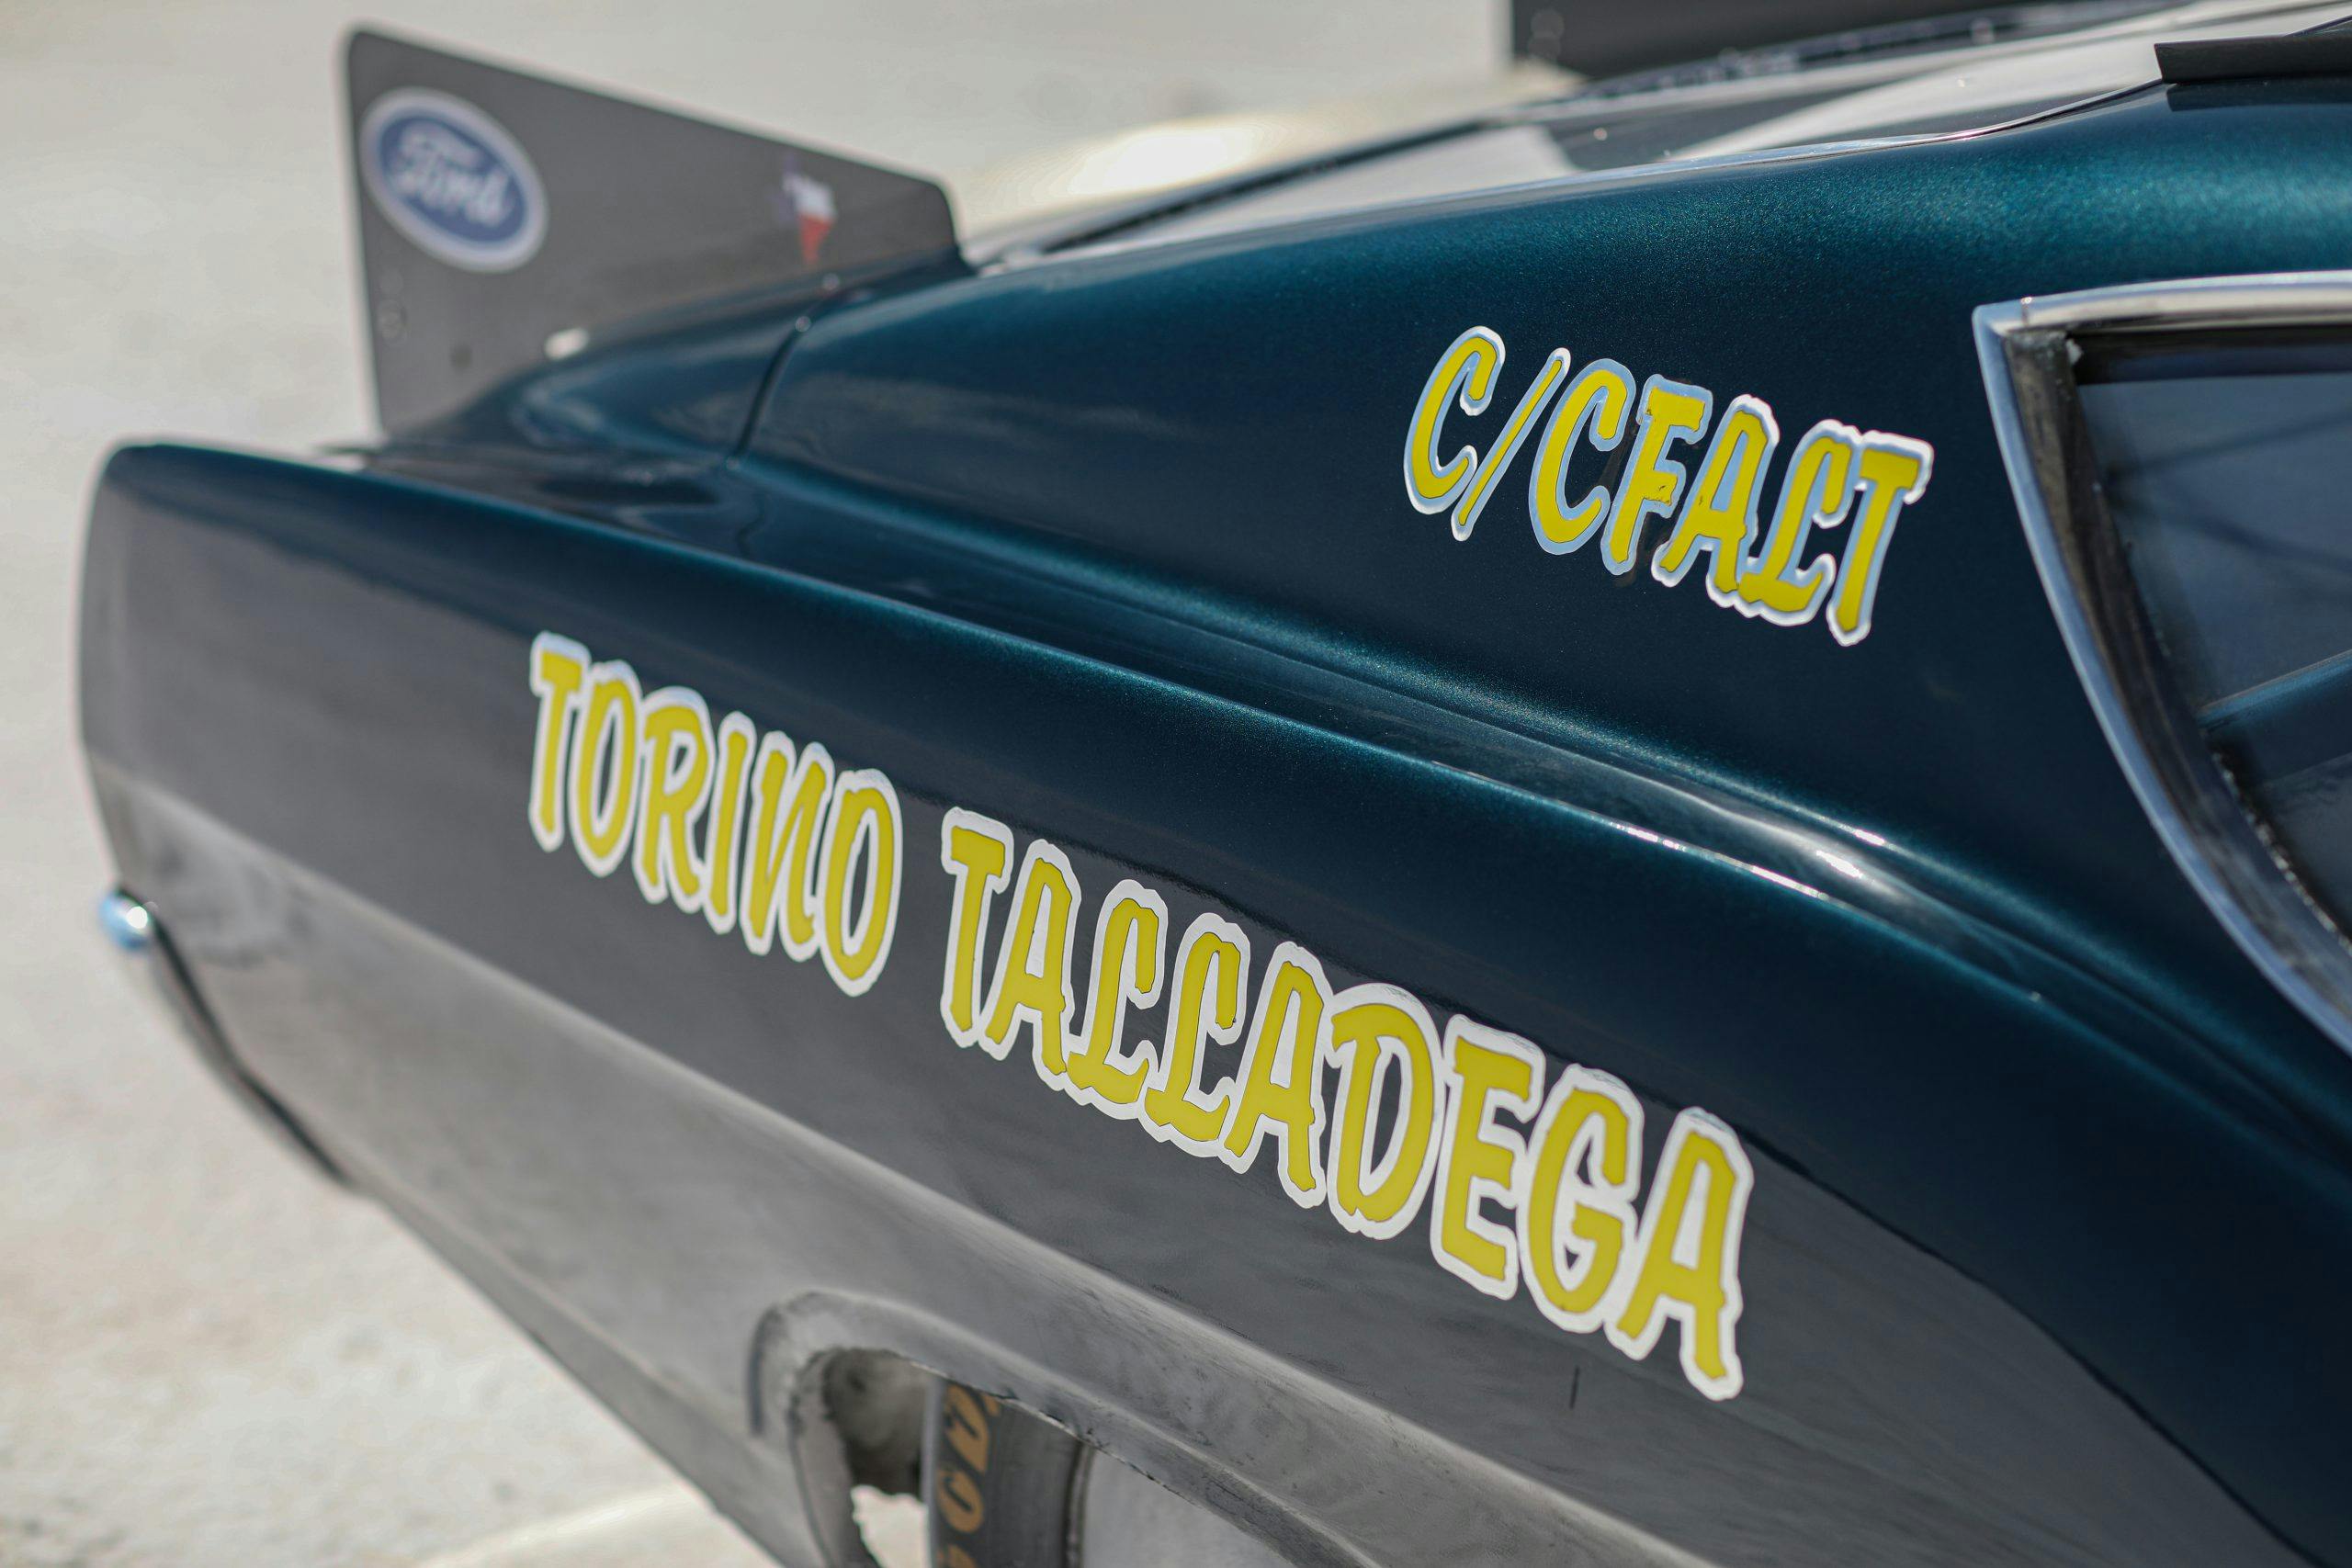 Torino Talladega SCTA class lettering